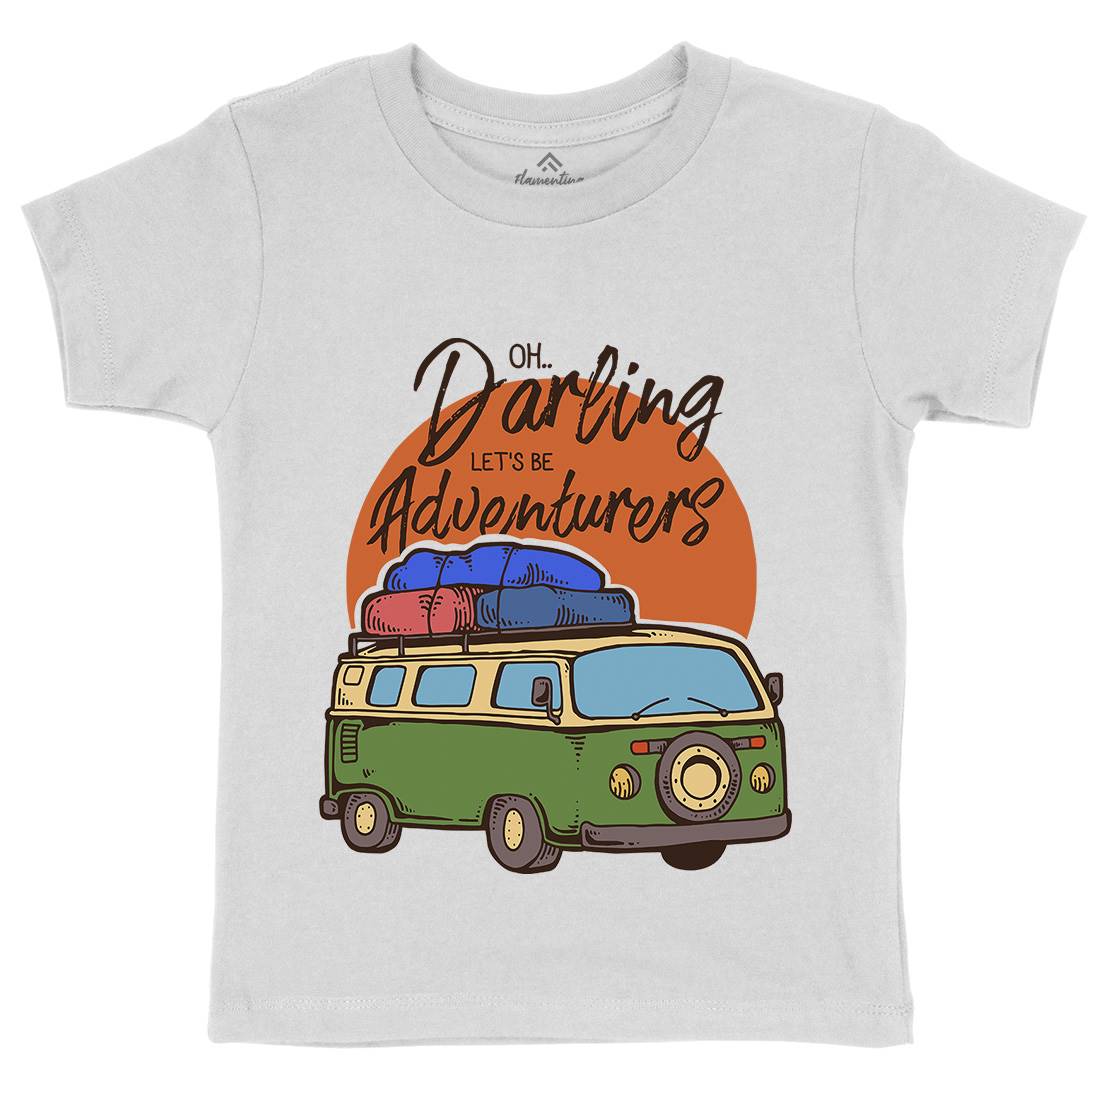 Be Adventurers Kids Crew Neck T-Shirt Nature C707